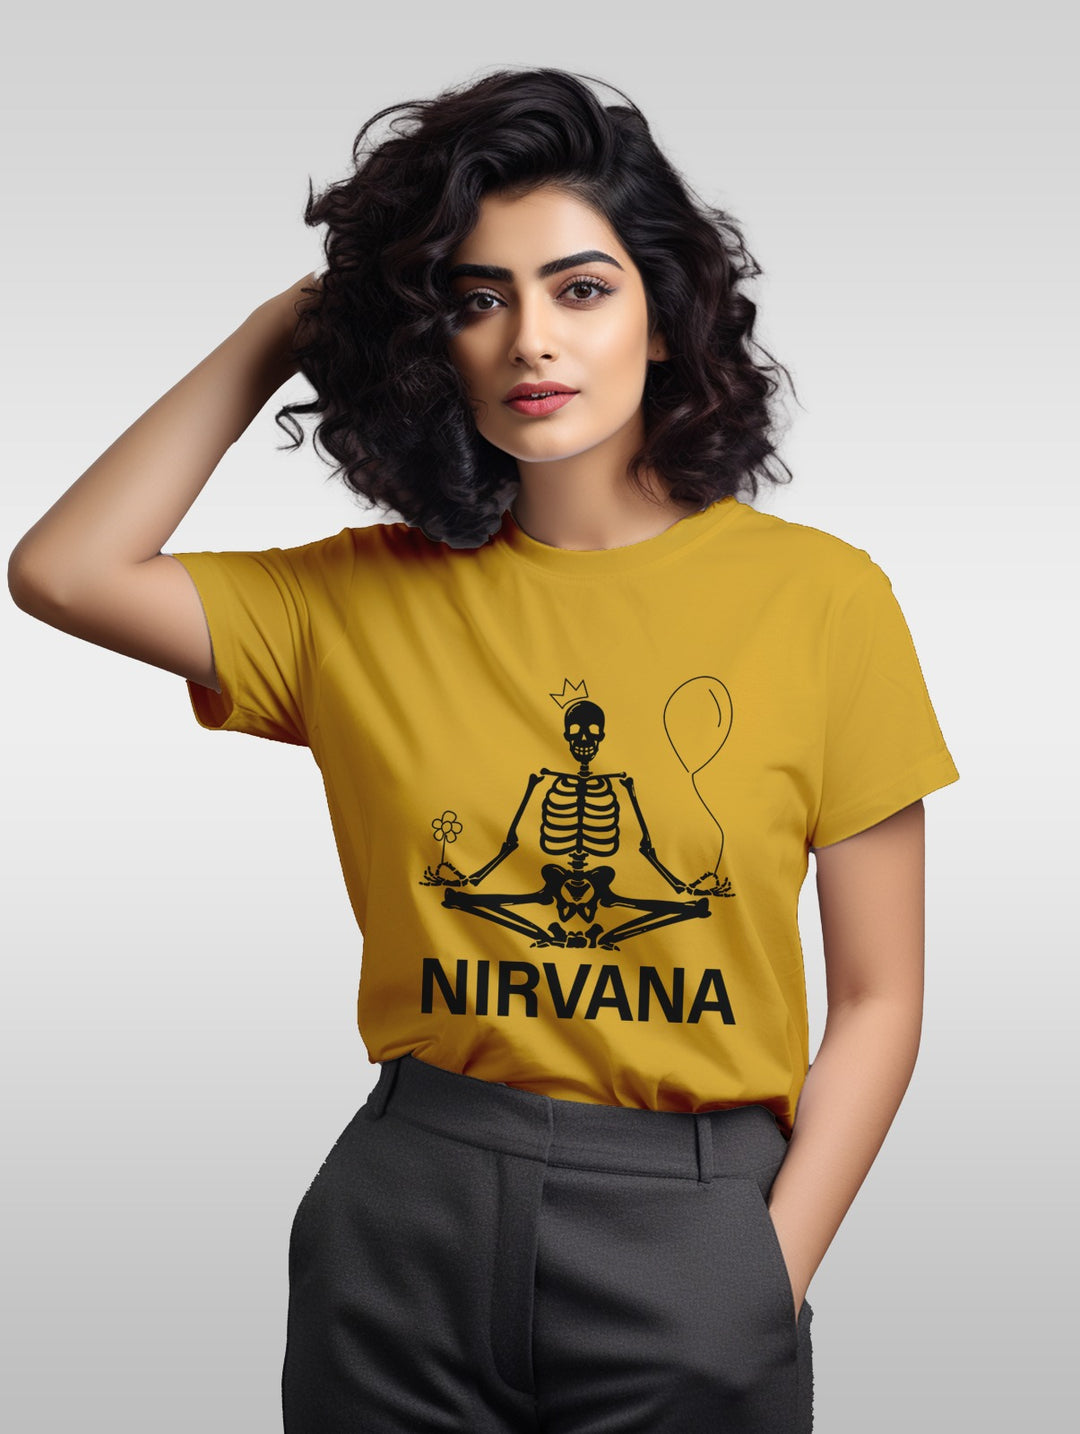 women's Nirvana tee